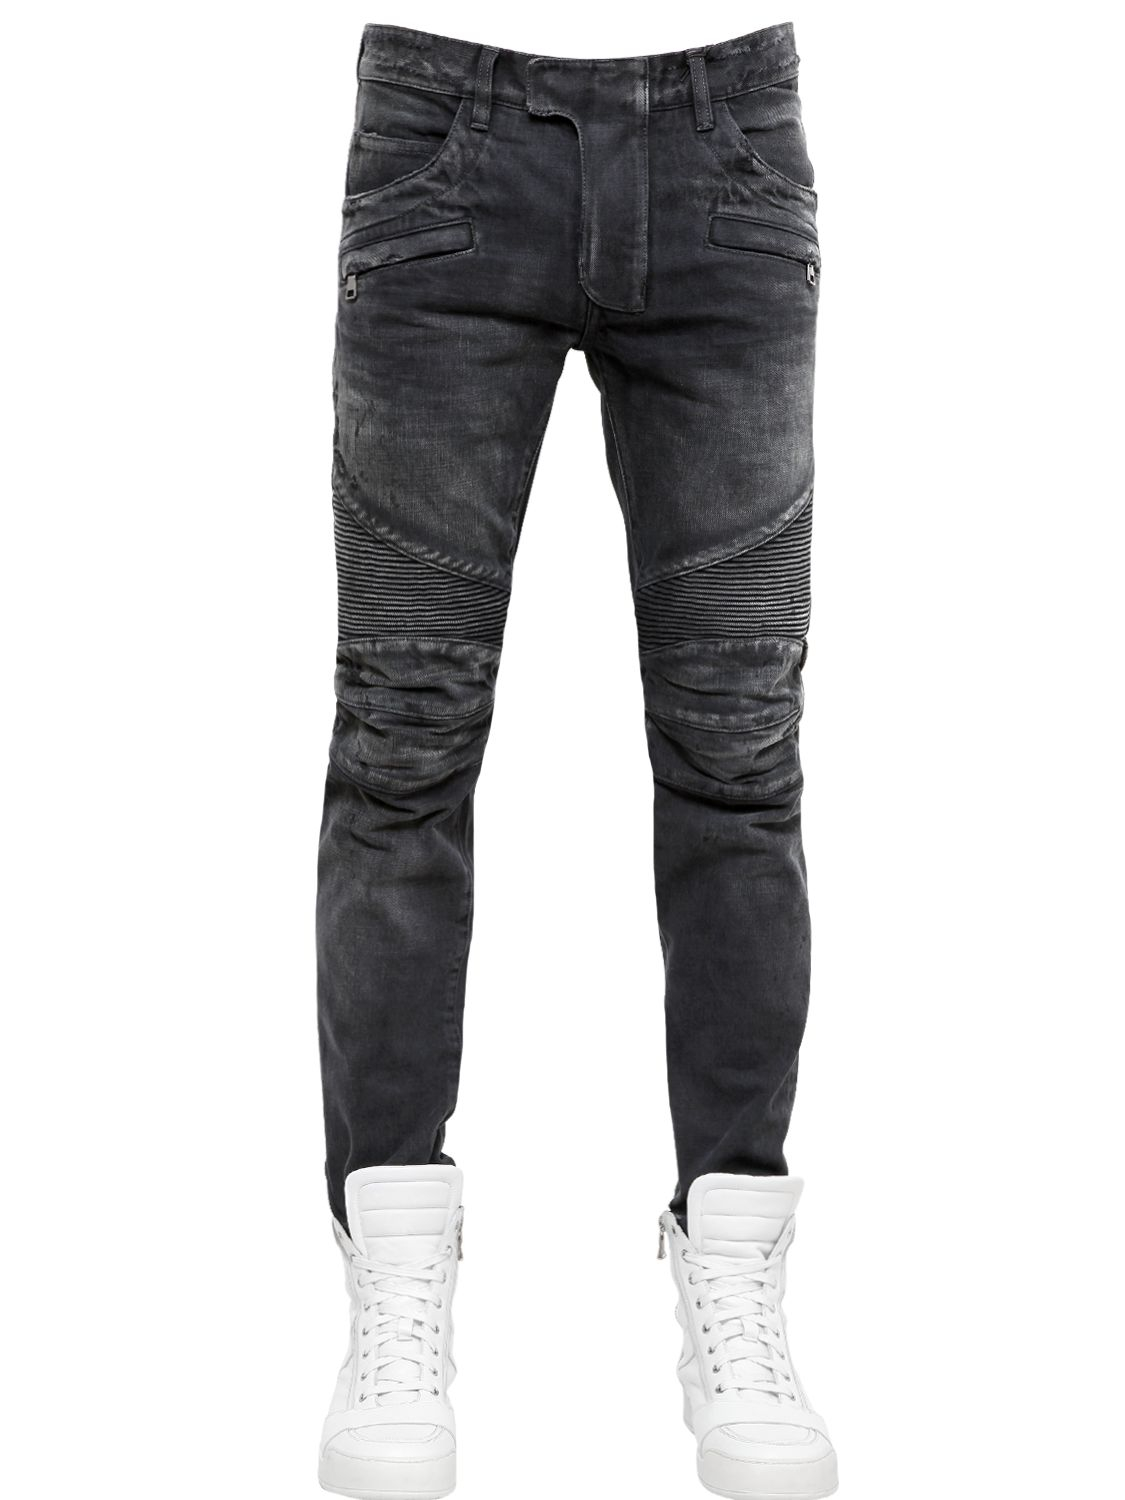 Lyst - Balmain 18cm Washed Cotton Denim Biker Jeans in Black for Men